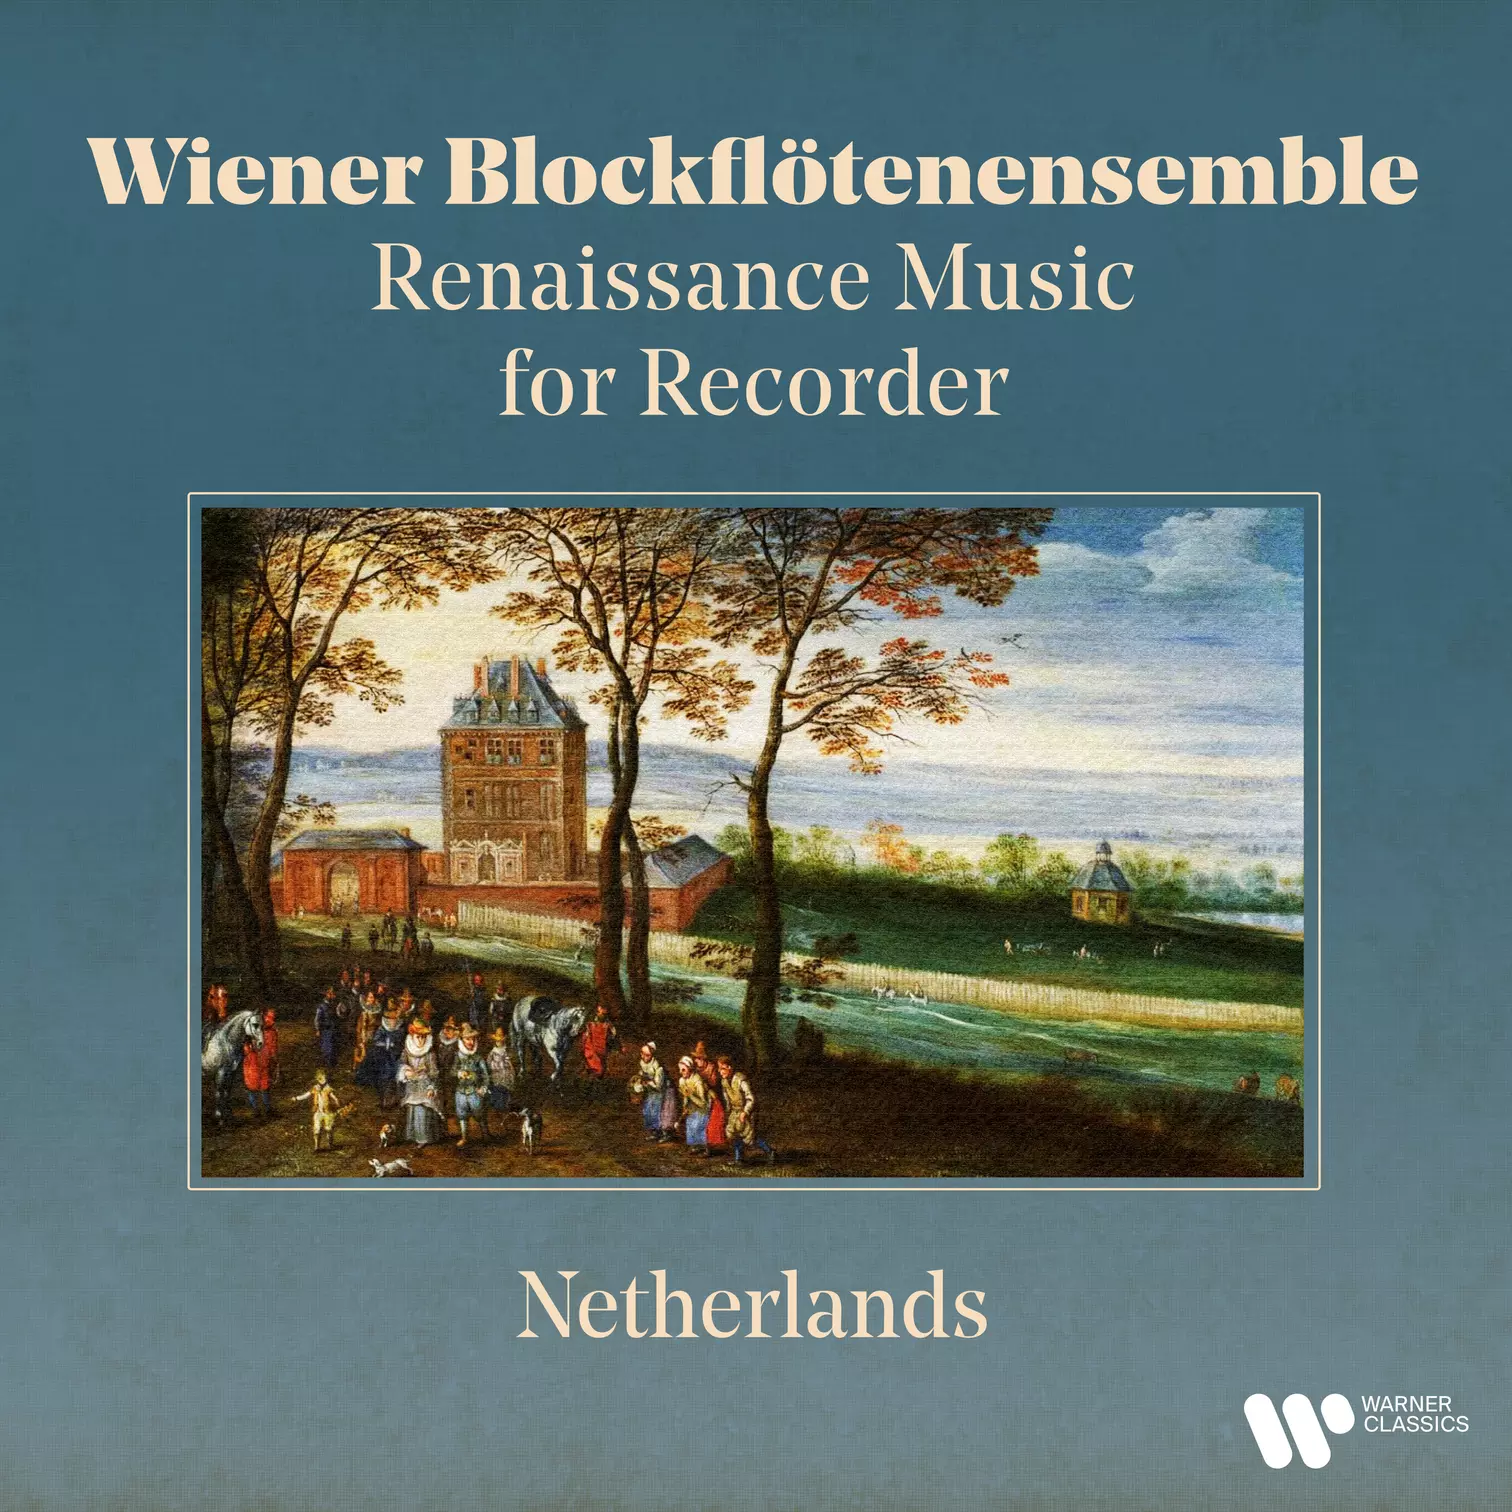 Renaissance Music for Recorder: Netherlands